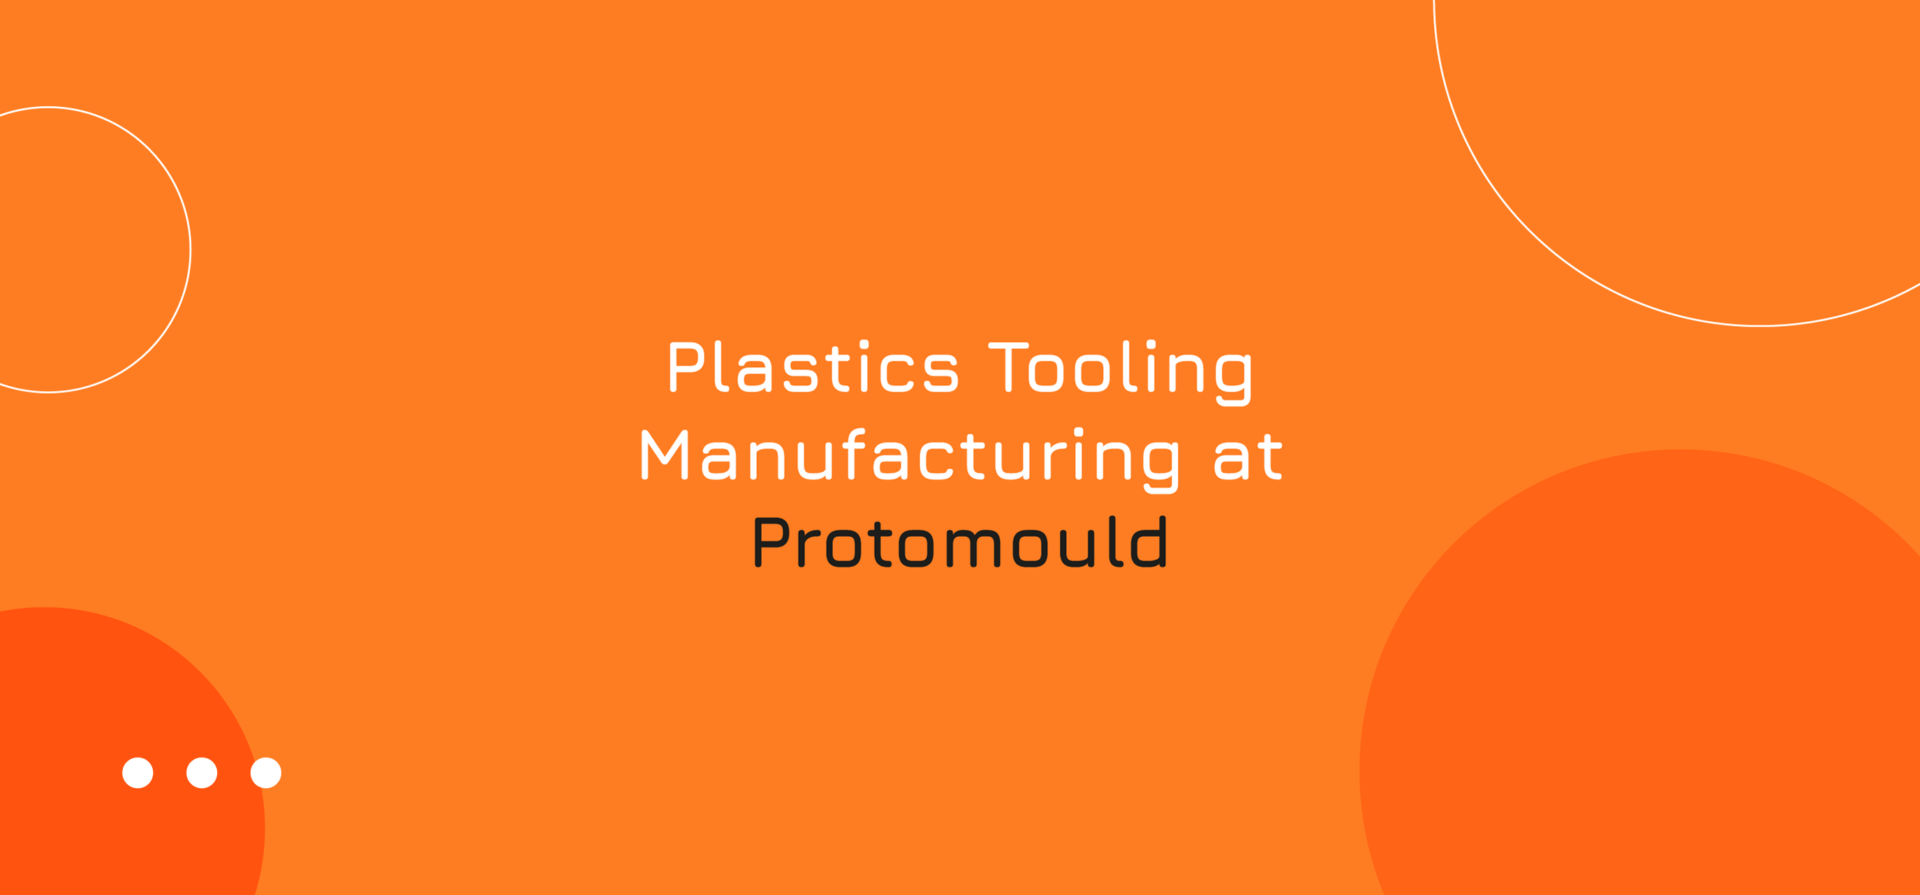 Plastics Tooling Manufacturing at Protomould